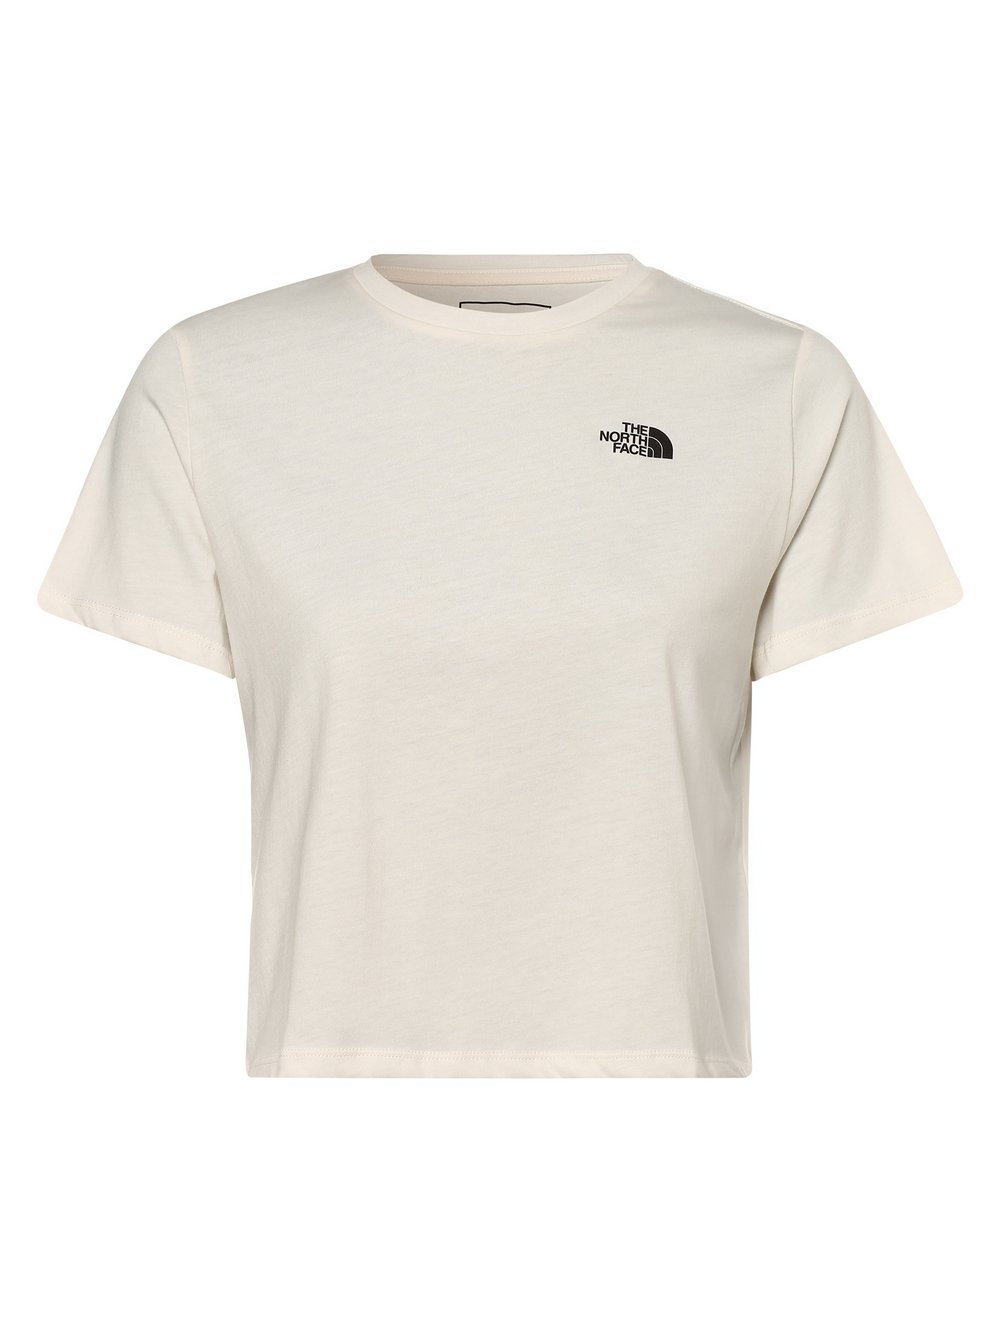 The North Face - T-shirt damski, biały